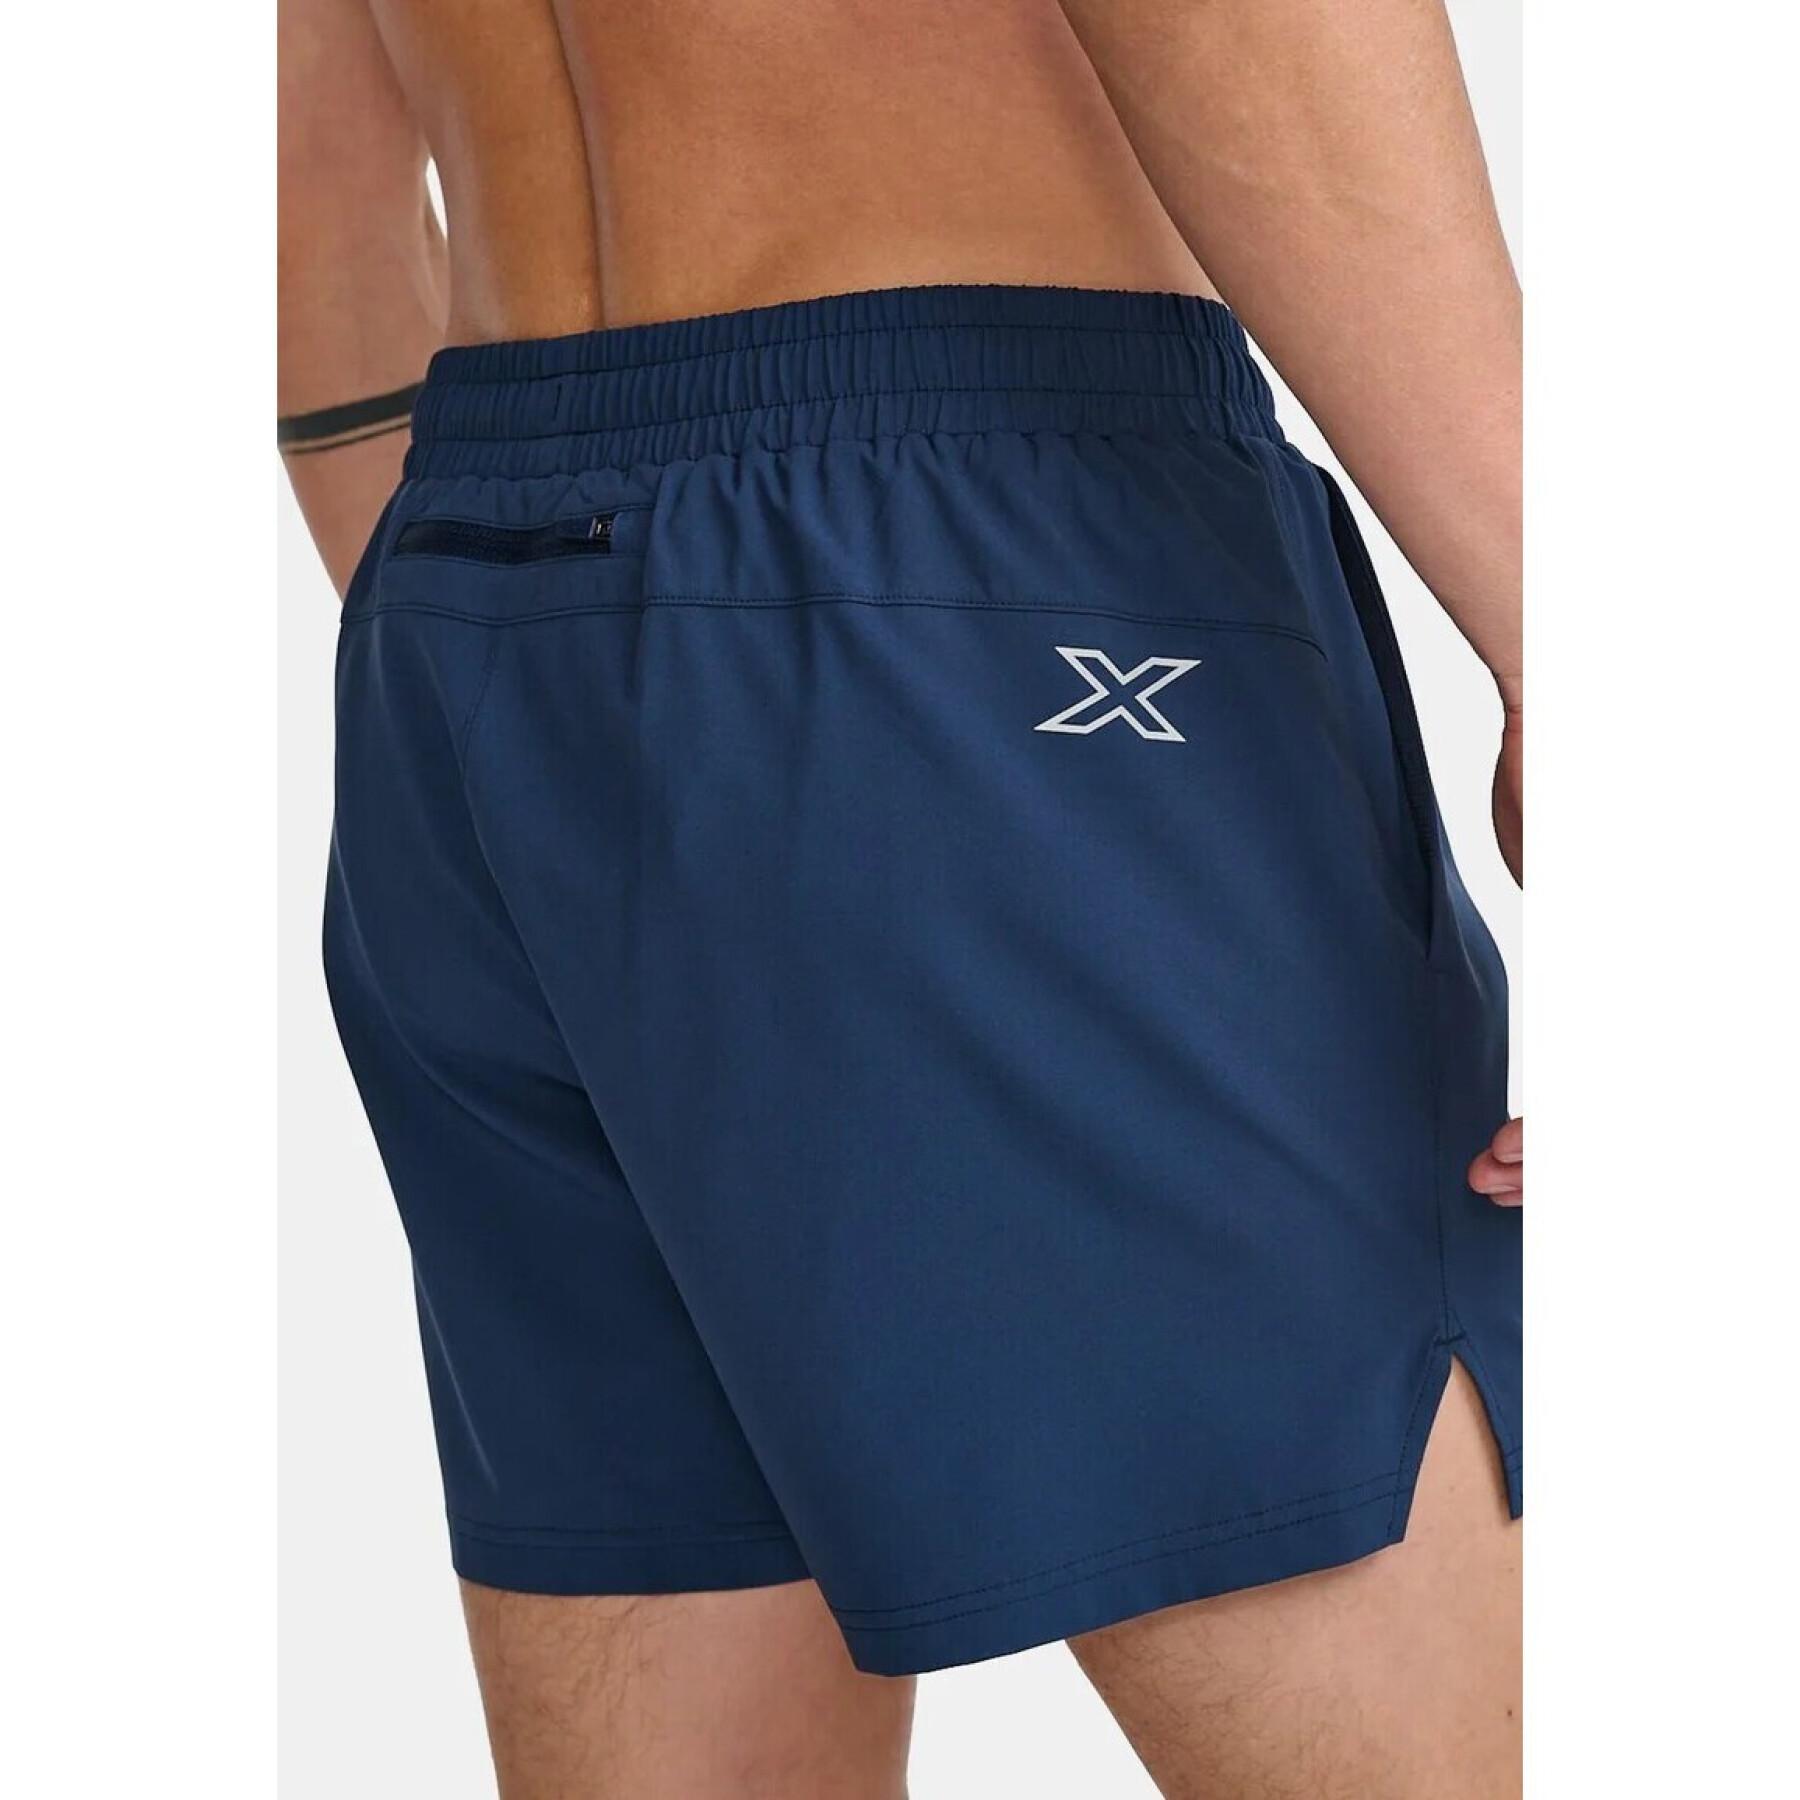 5-inch shorts 2XU Aero